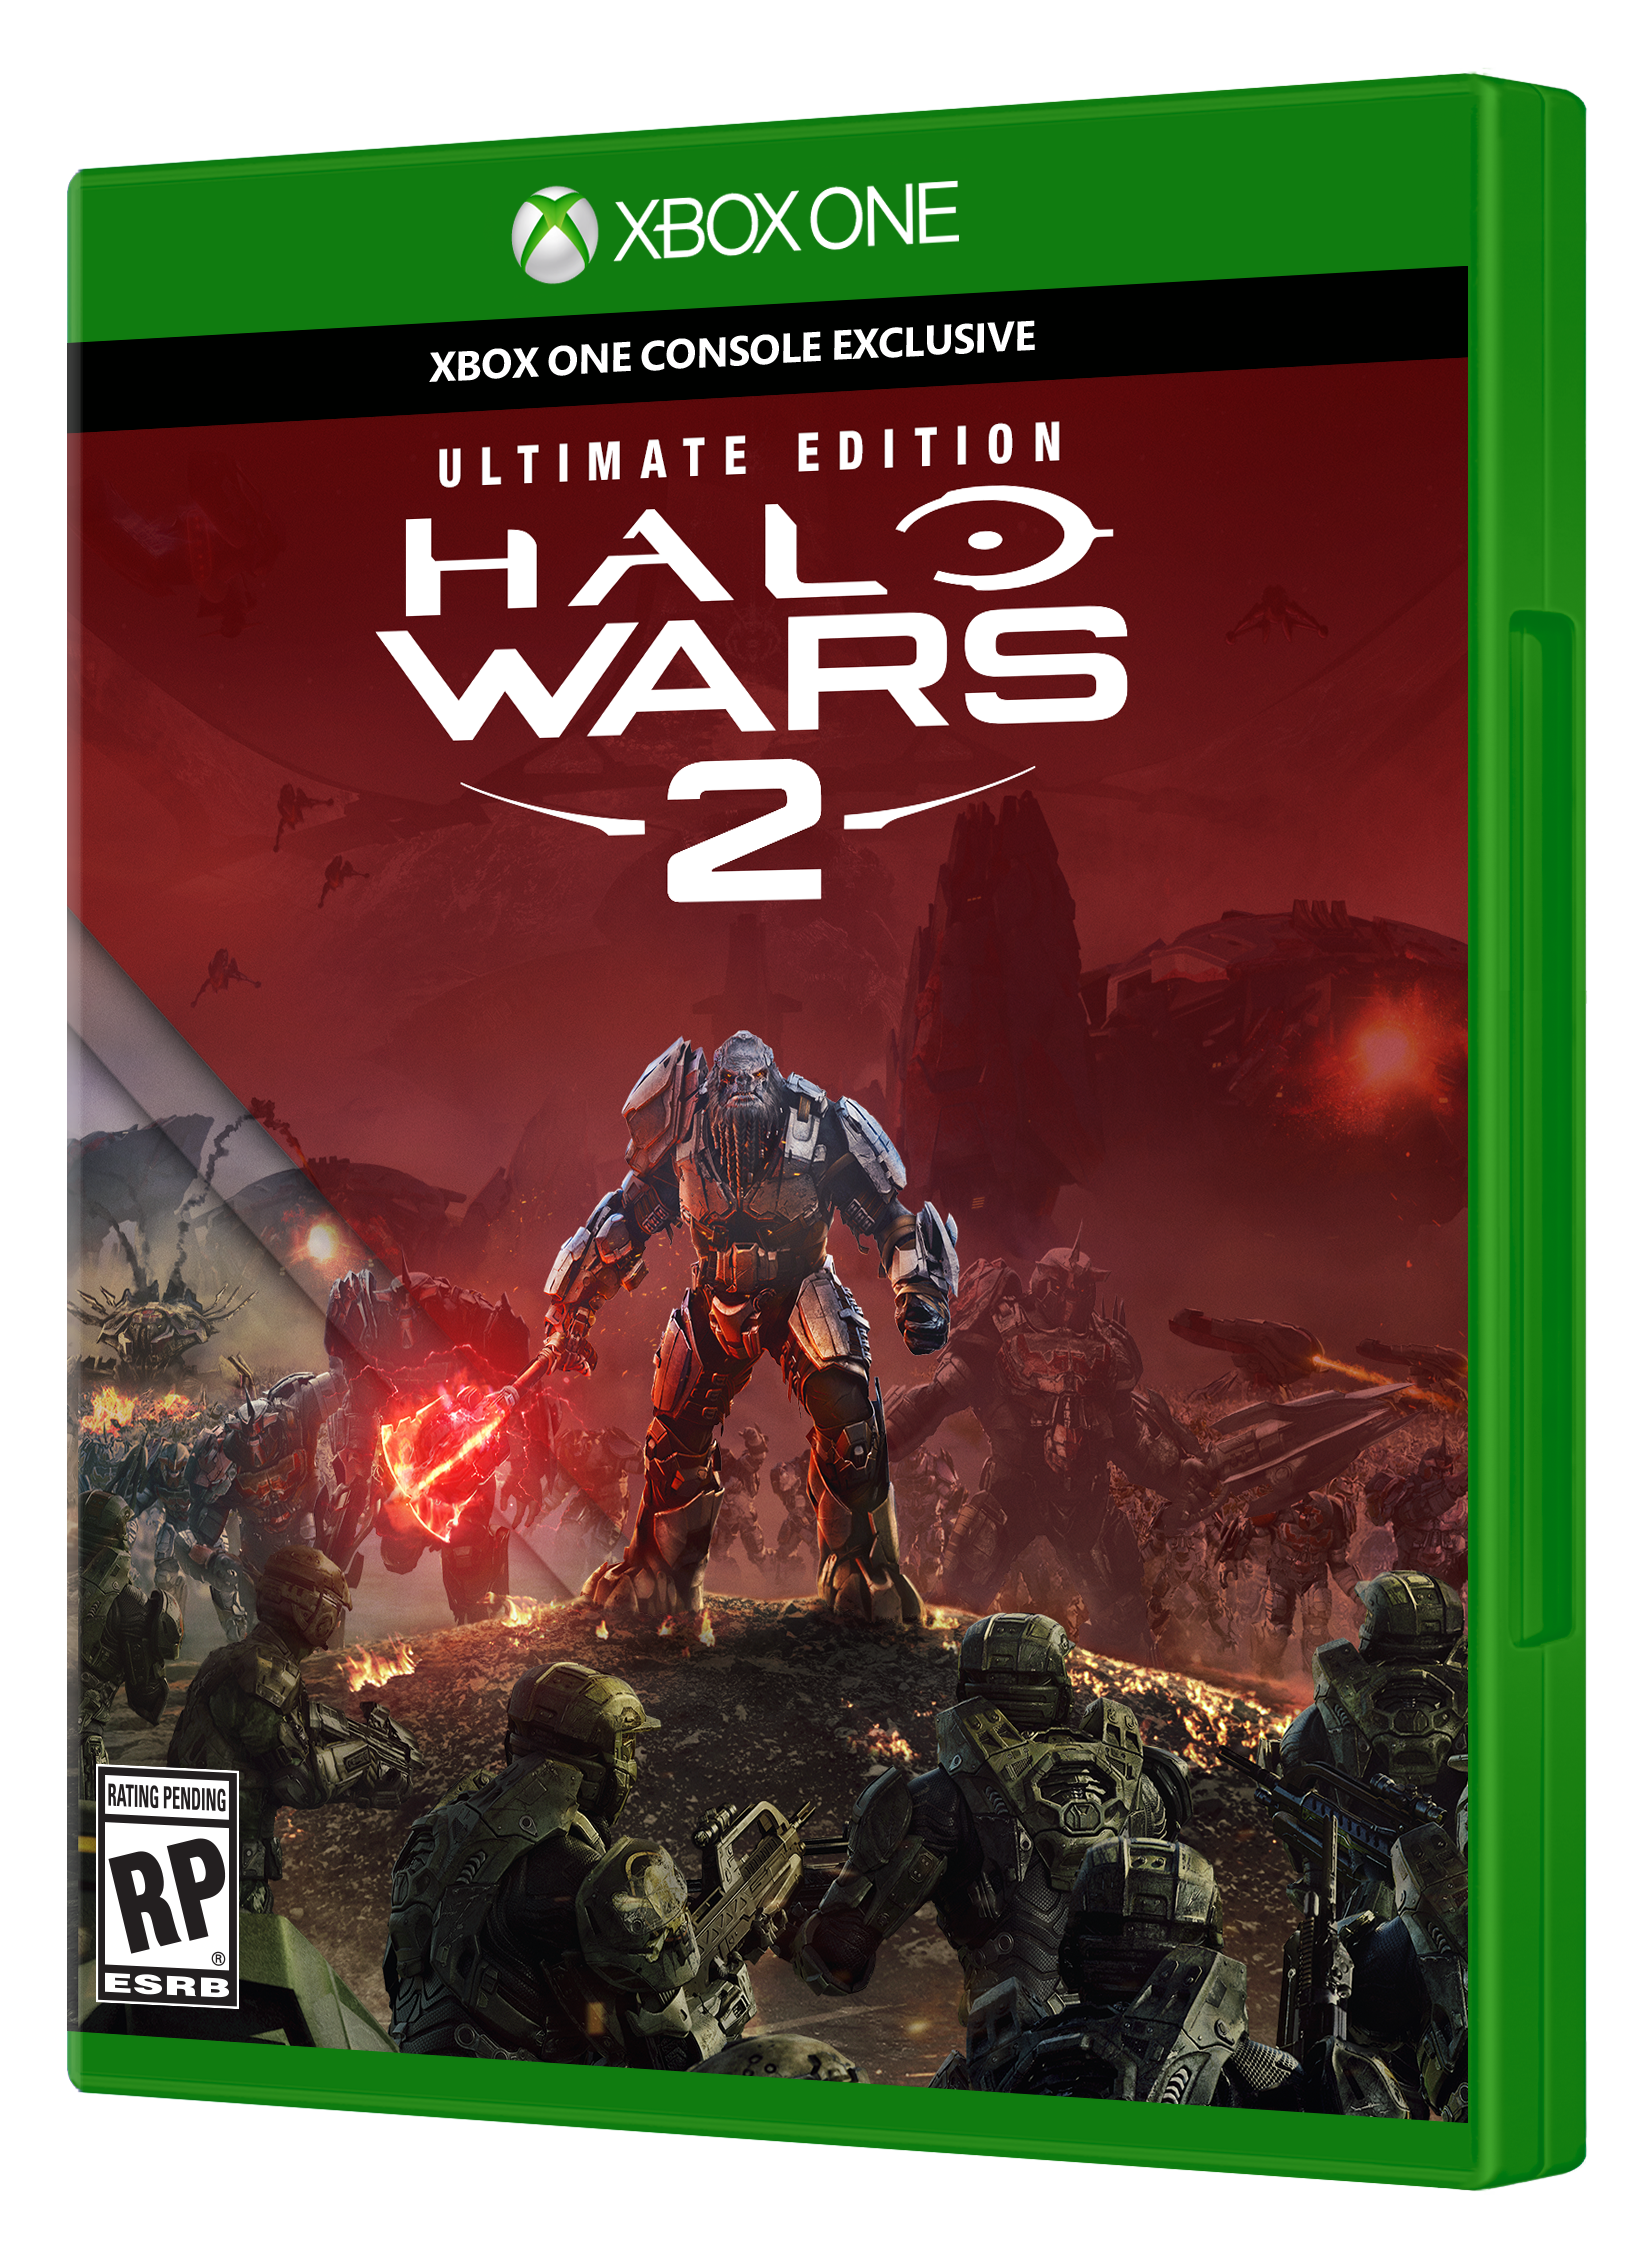 Halo Wars 2 Ultimate Edition Right Box Shot